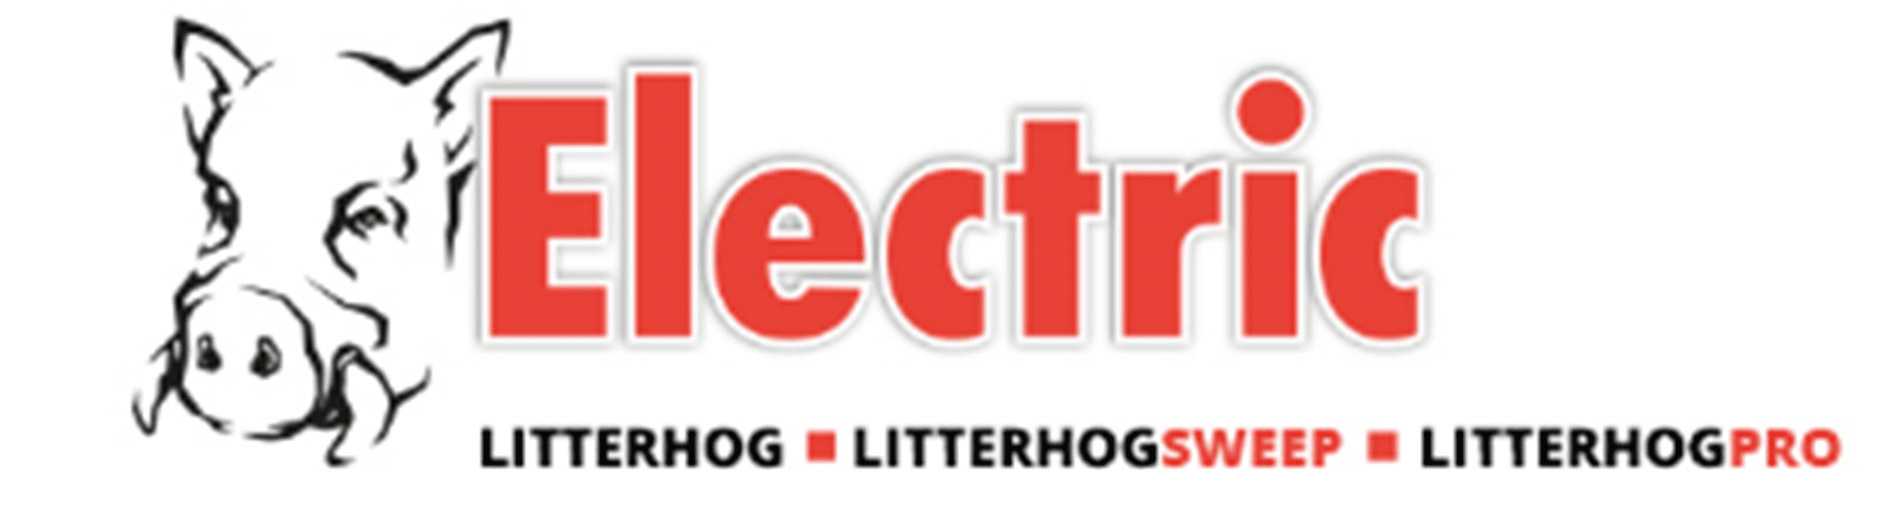 Euromec to offer TPPL members 20% discount on NEW electric LitterHog range